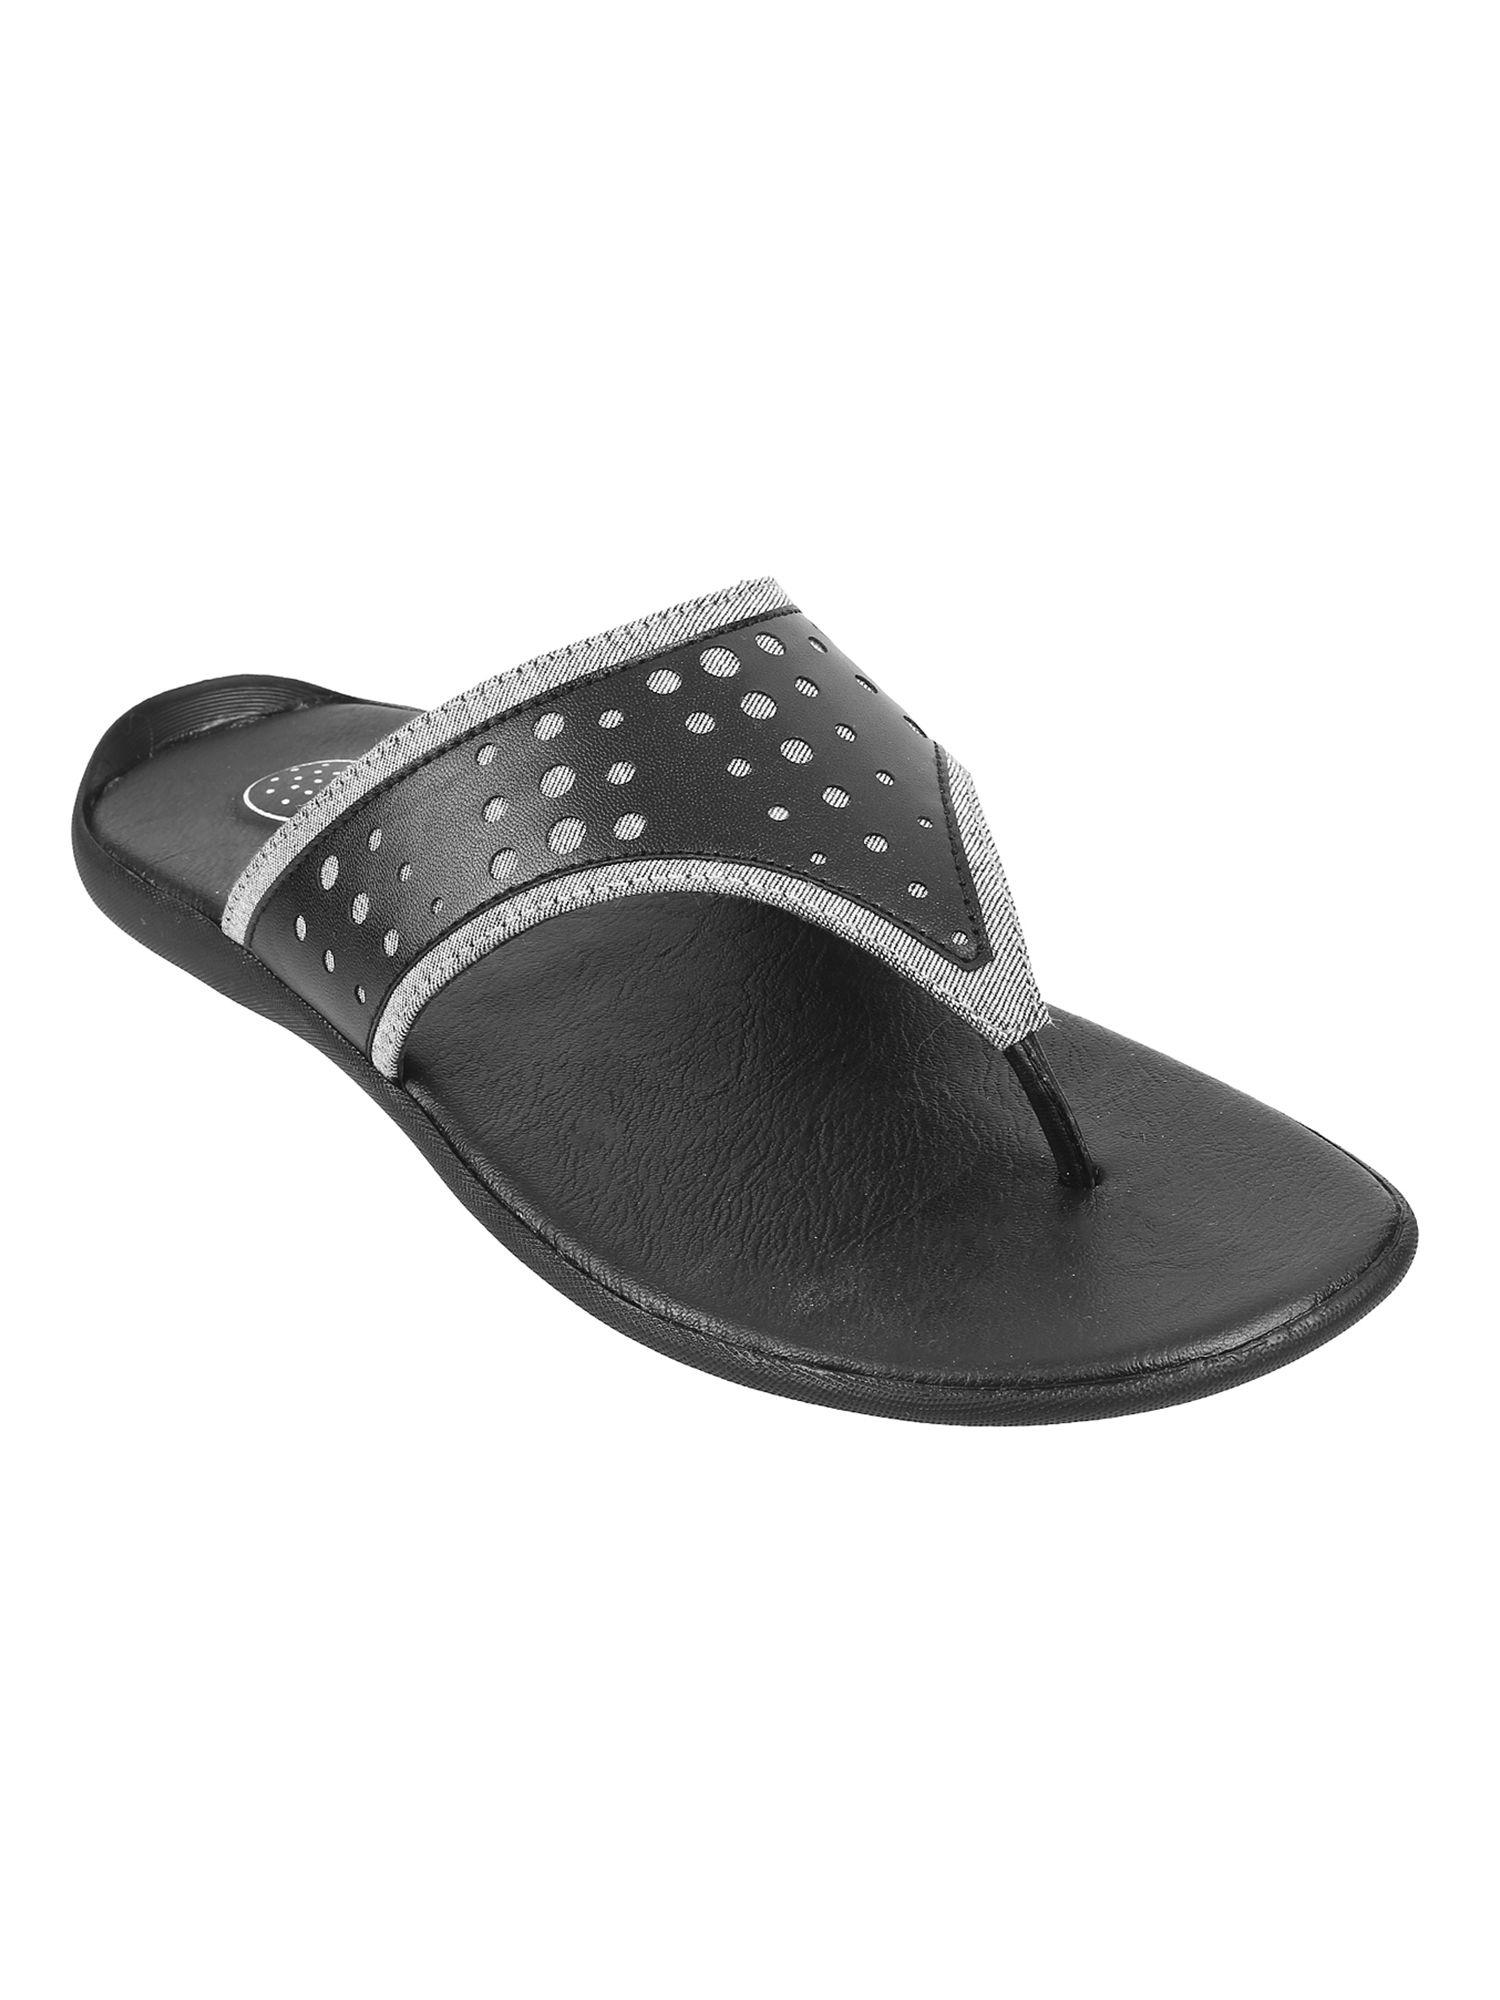 mens black flat chappalsmochi black solid sandals